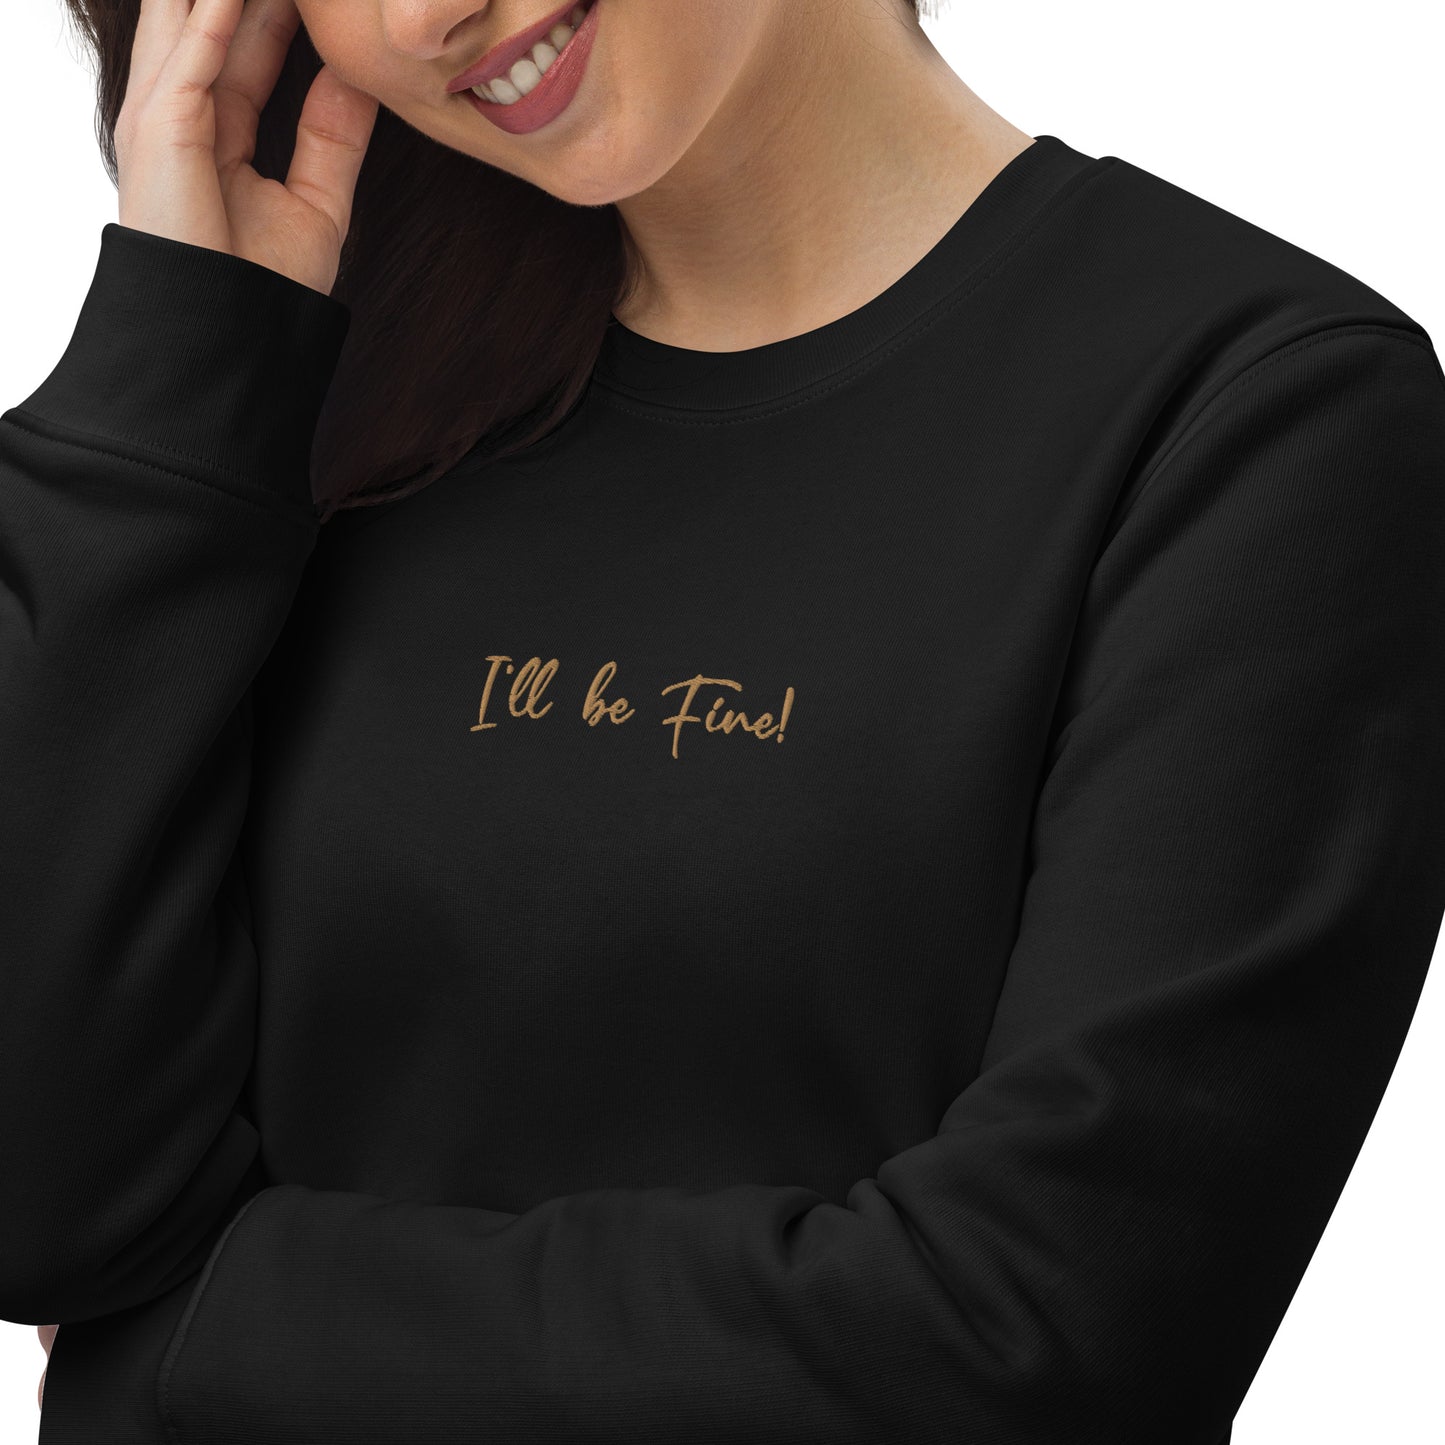 I'll Be Fine! Women's Organic Cotton Sweatshirt